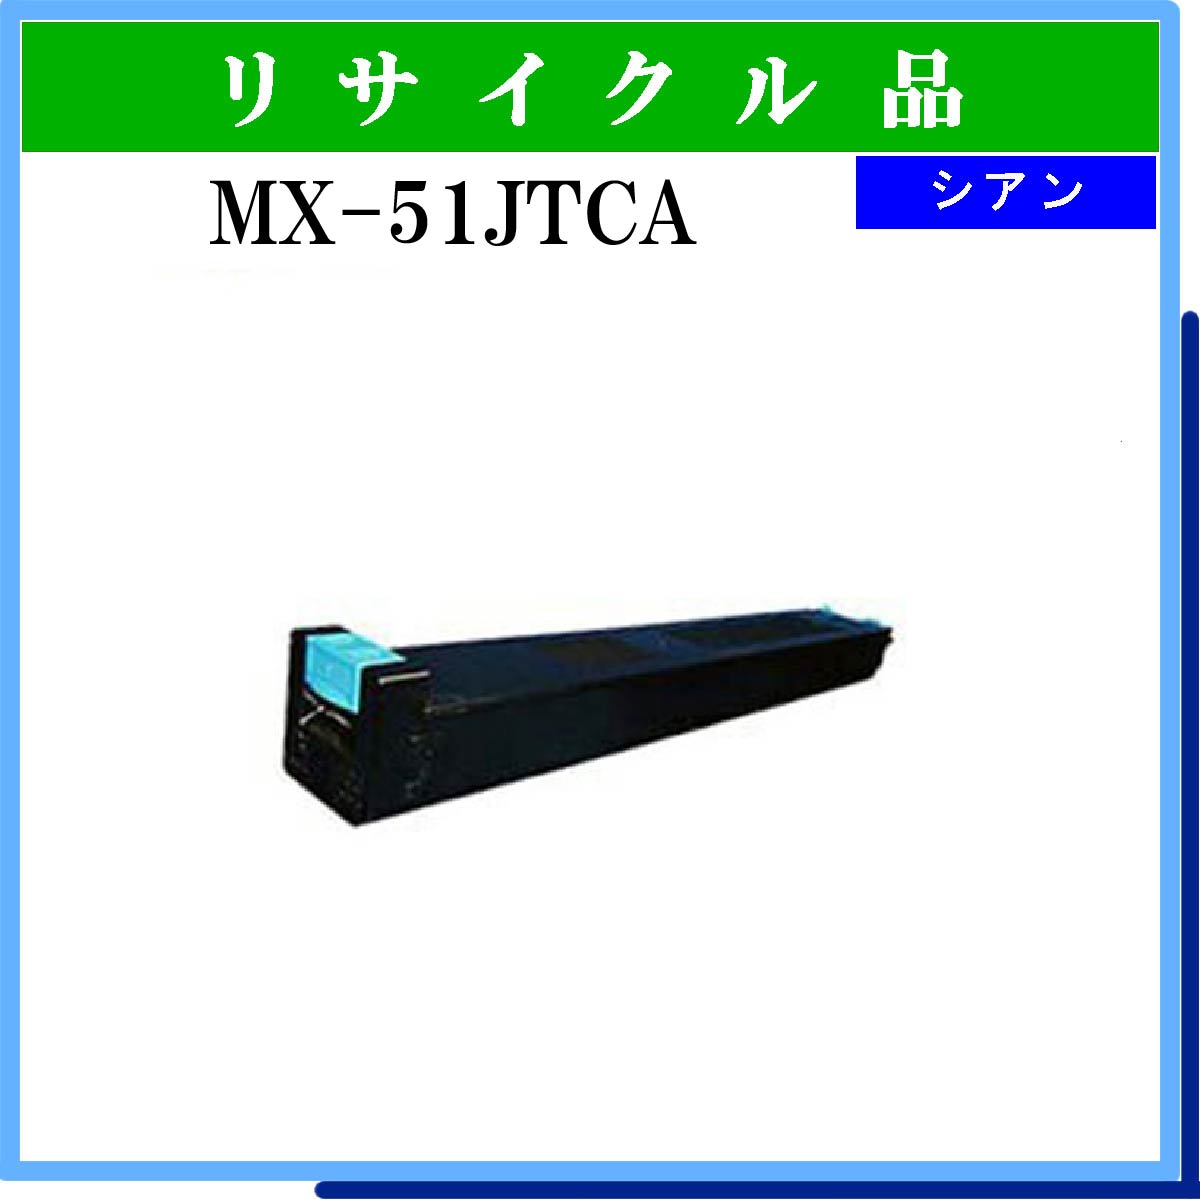 MX-51JTCA - ウインドウを閉じる